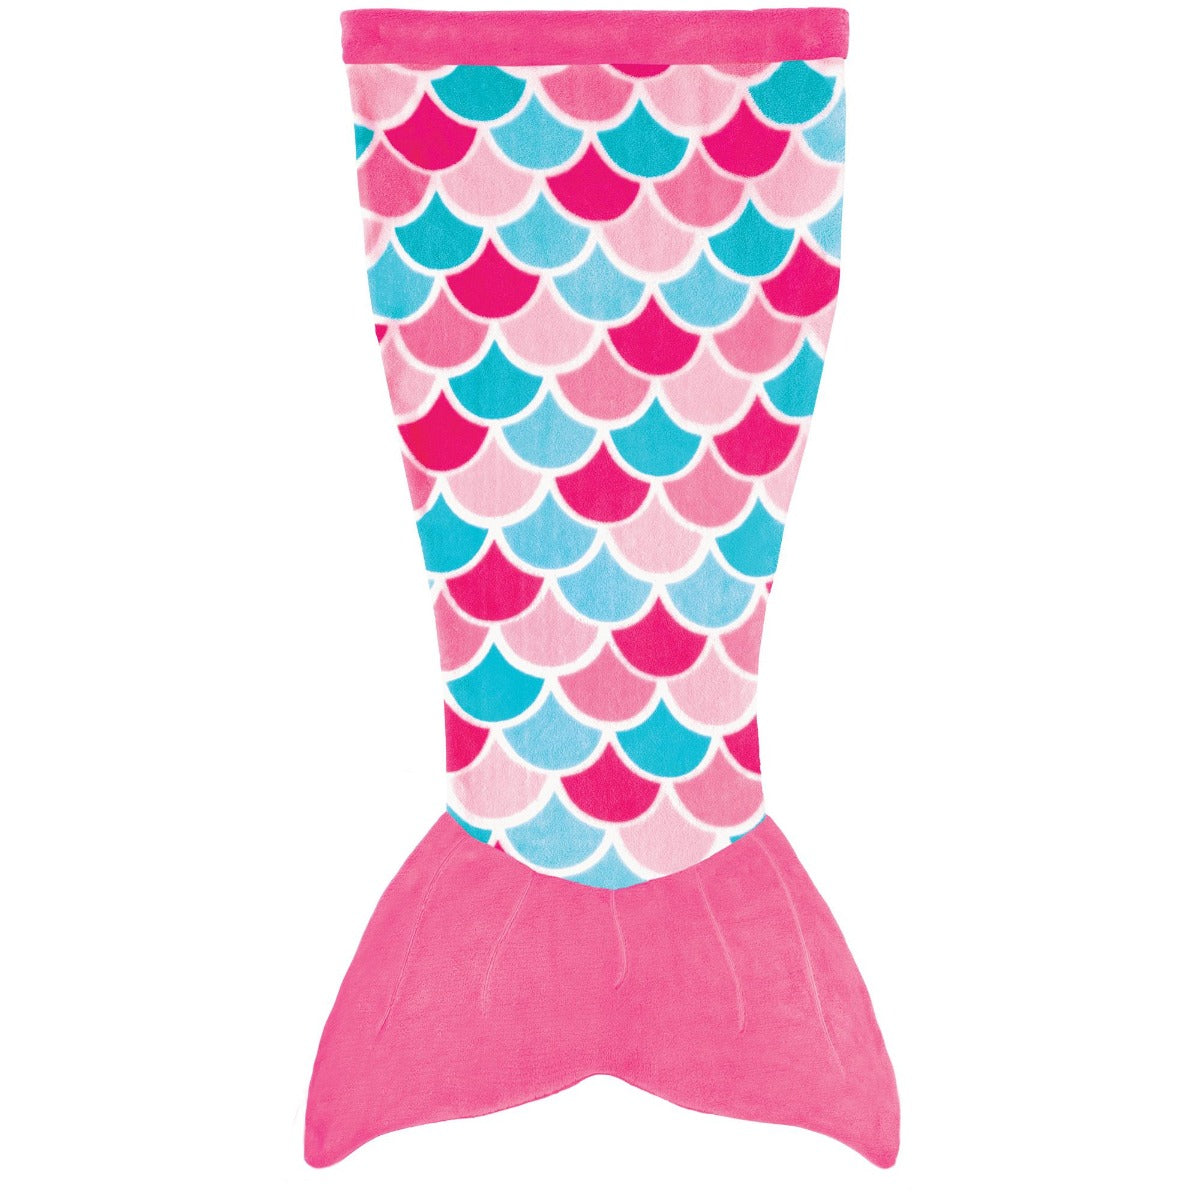 Cuddle Tails Mermaid Tail Blanket in Pink Dream